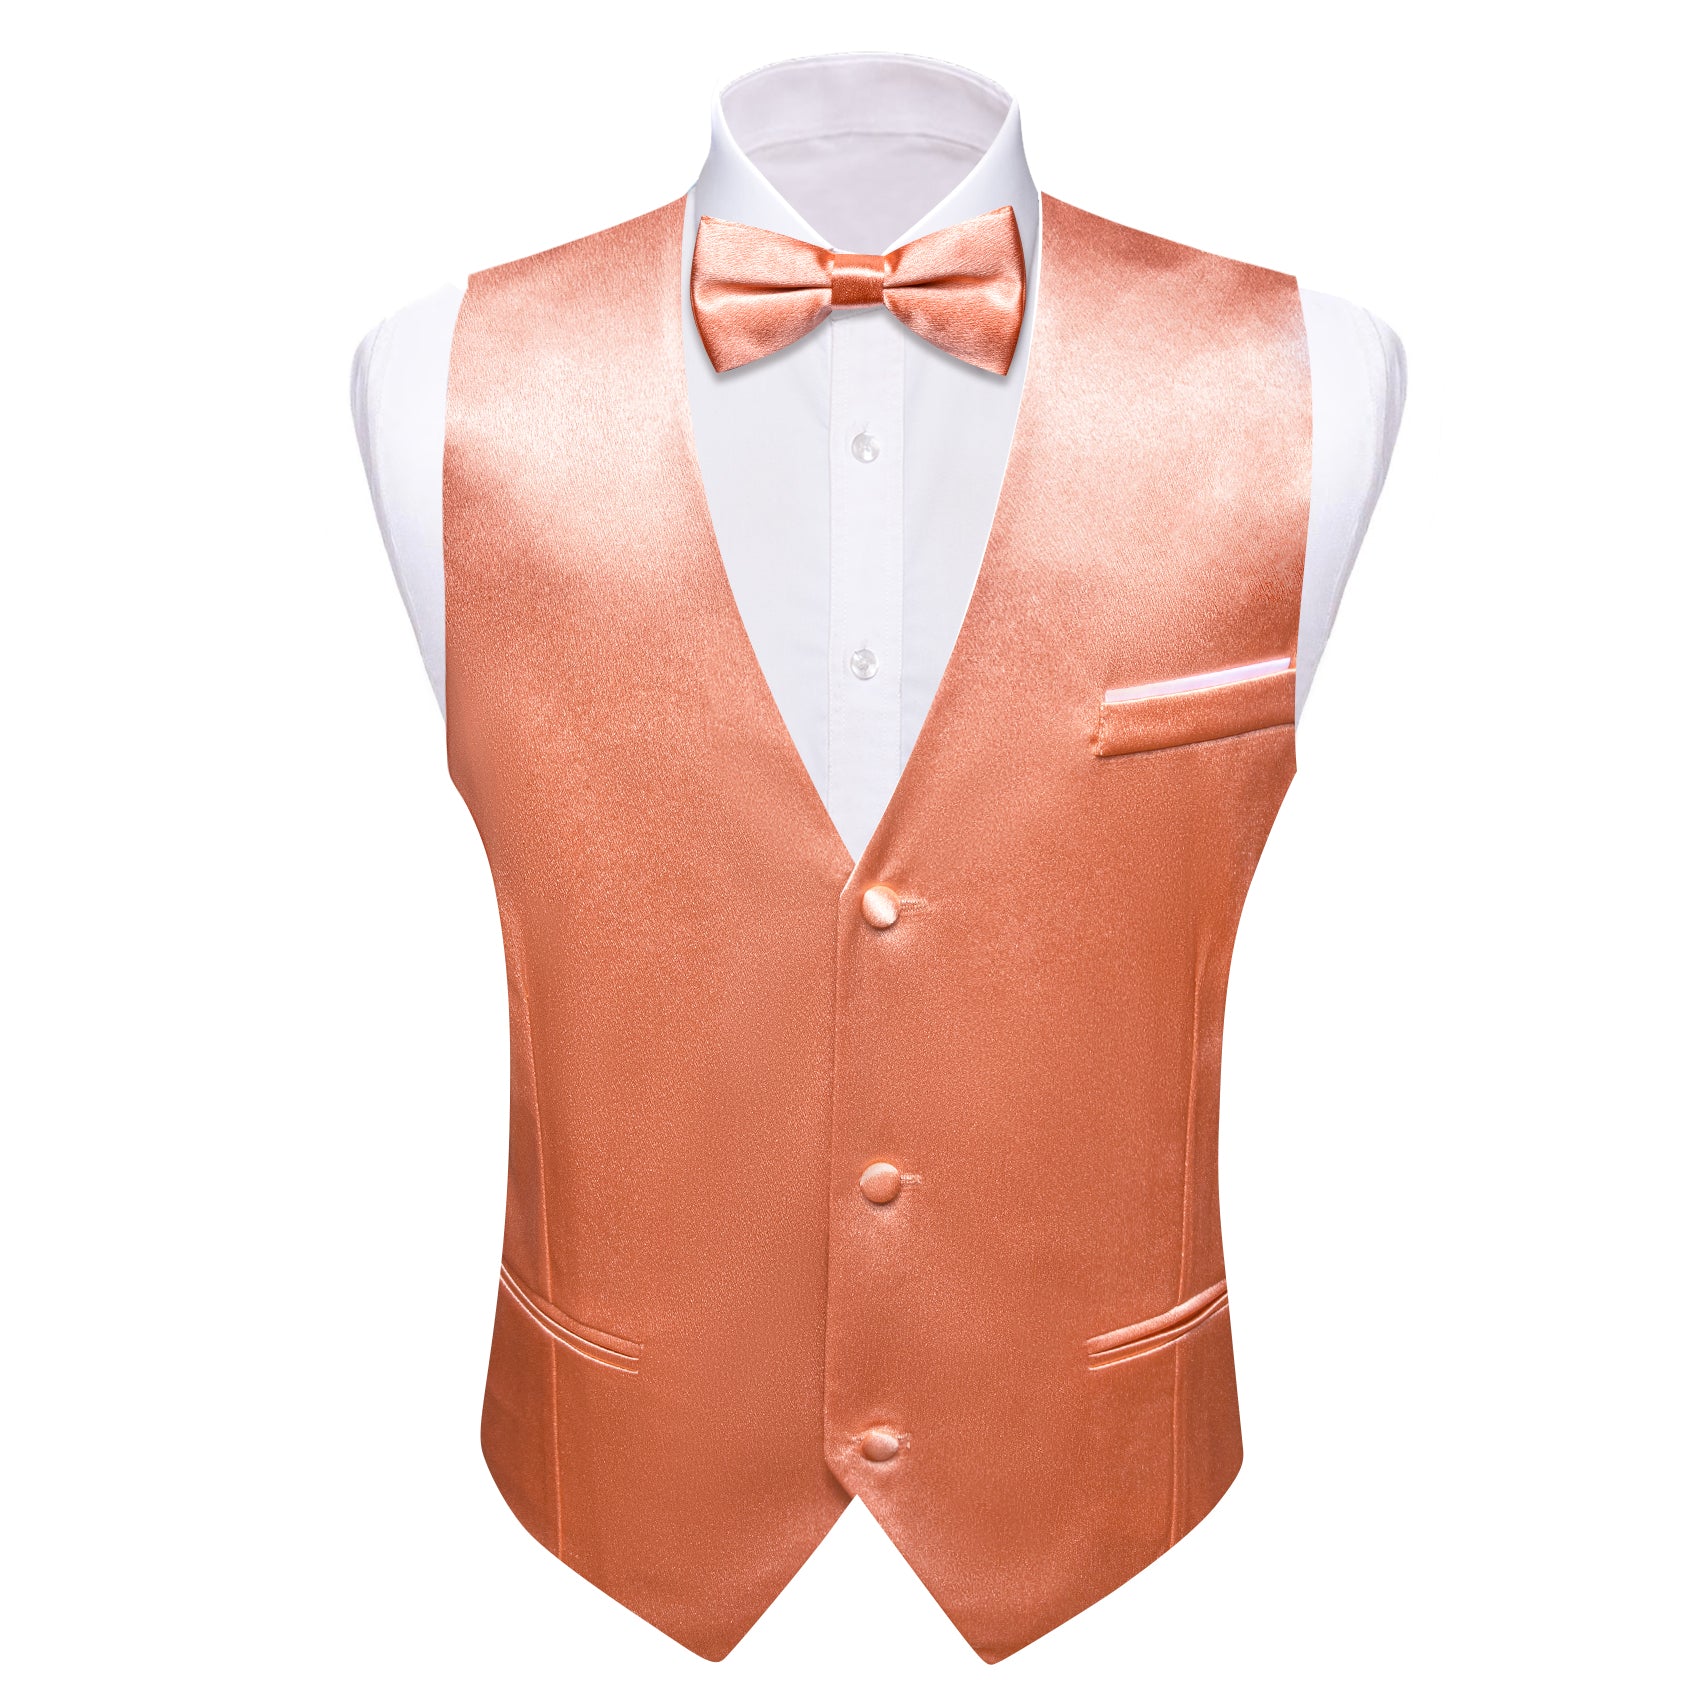 Barry.wang Coral Solid Business Vest Suit